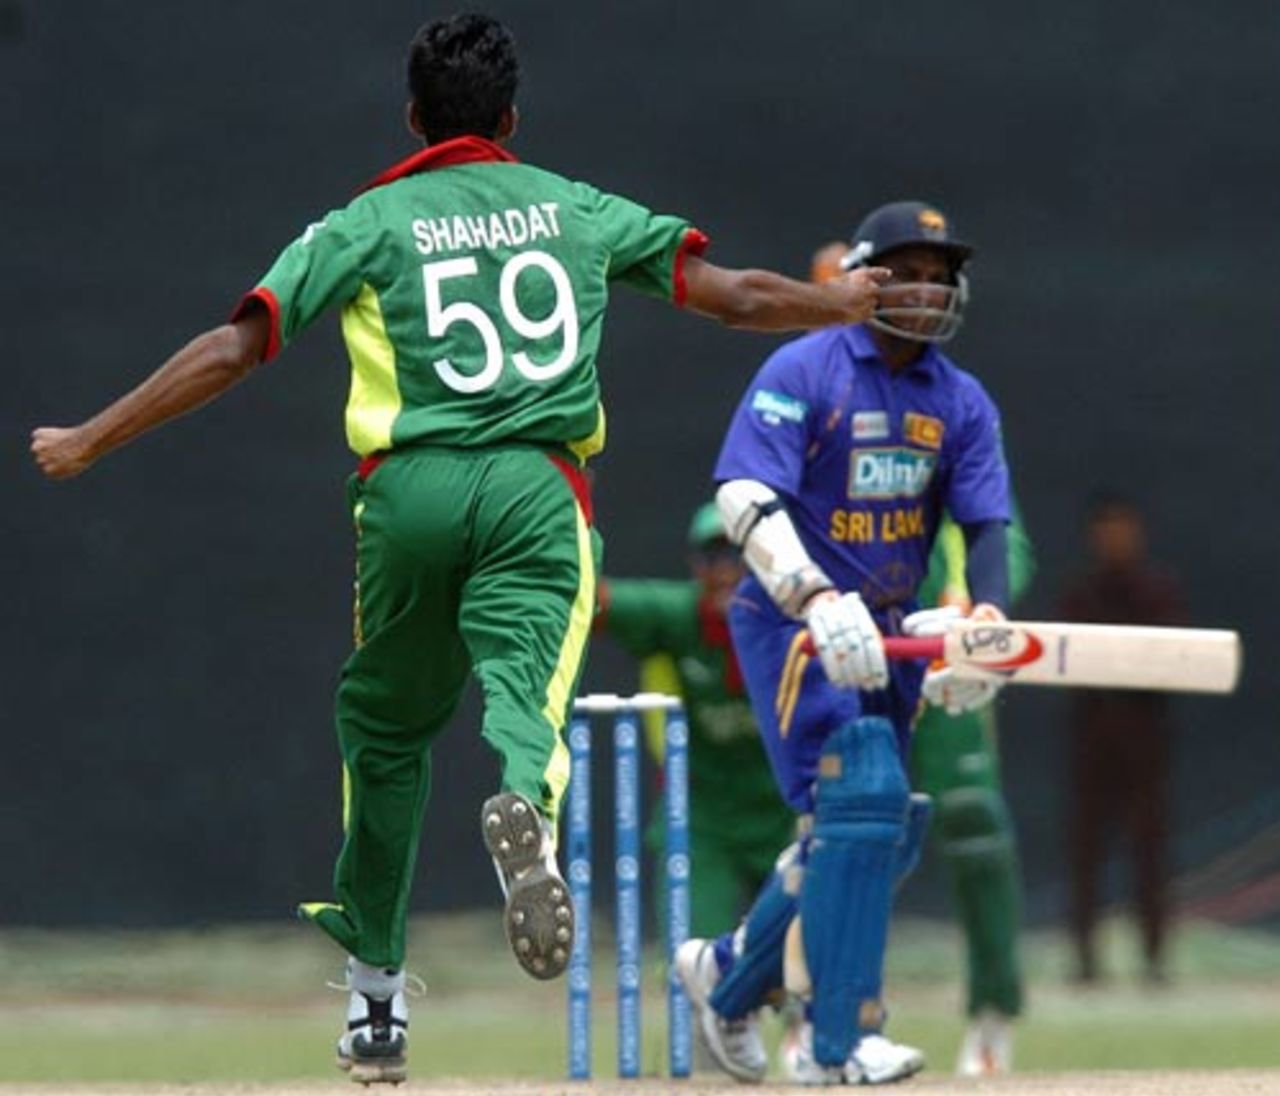 Shahadat Hossain gets the prized wicket of Sanath Jayasuriya, Sri Lanka v Bangladesh, 3rd ODI, Colombo, July 25, 2007 

